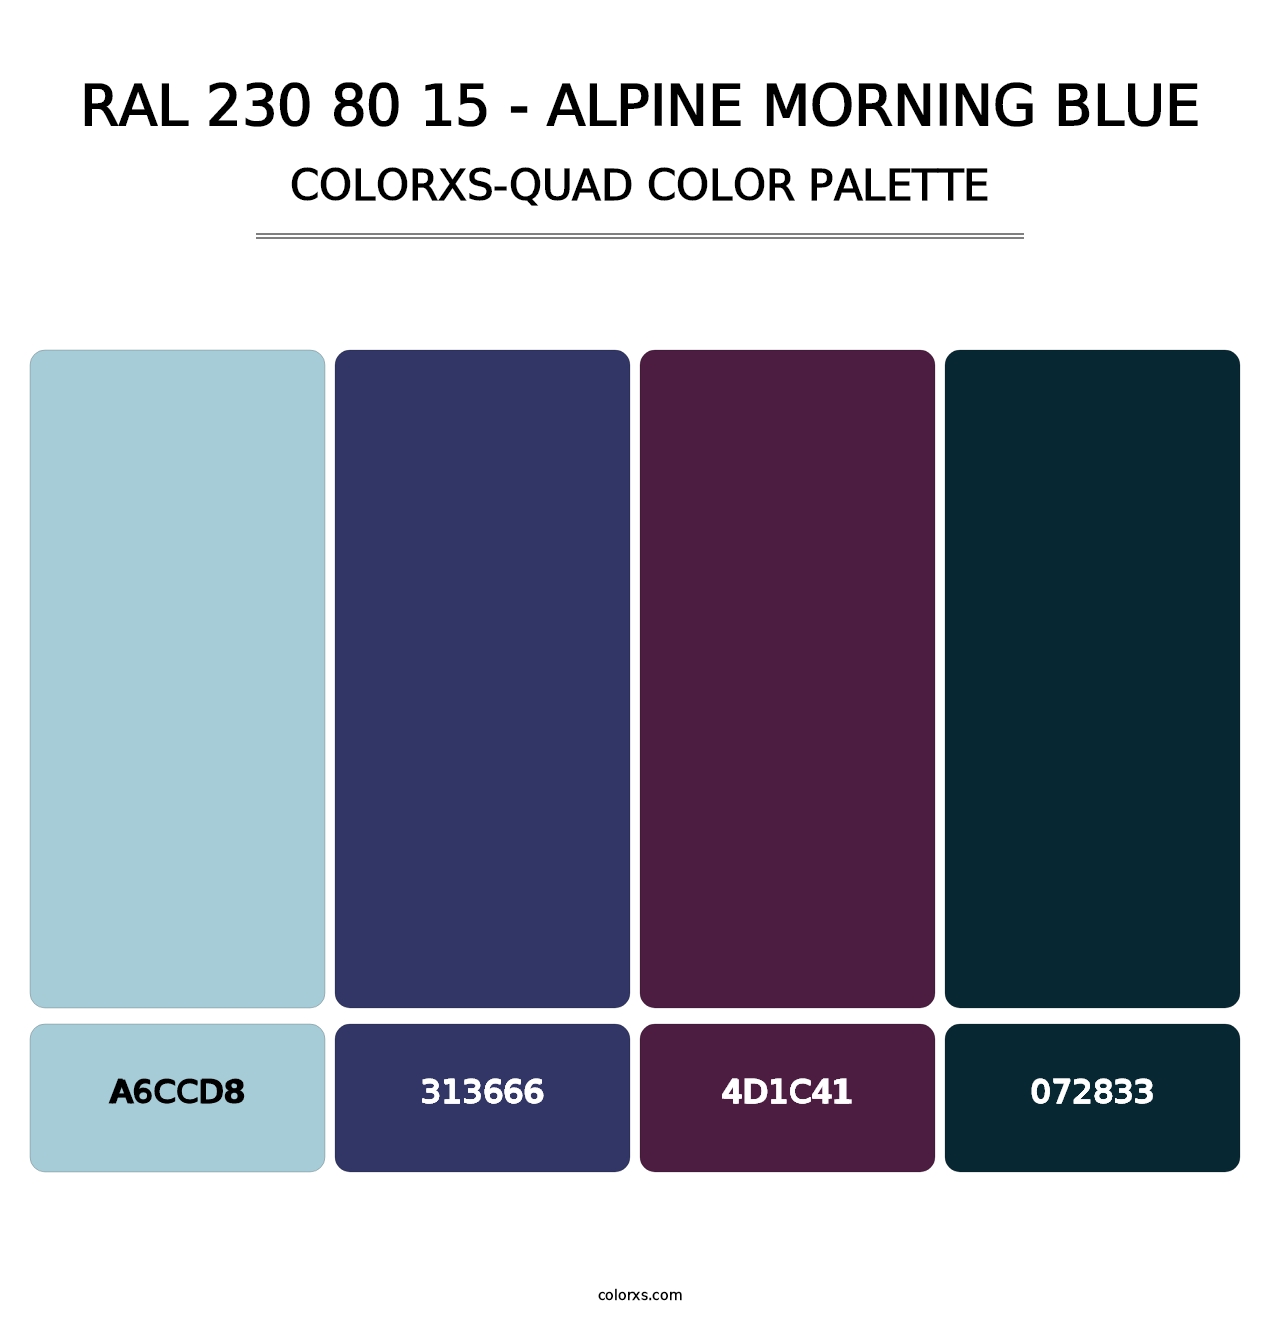 RAL 230 80 15 - Alpine Morning Blue - Colorxs Quad Palette